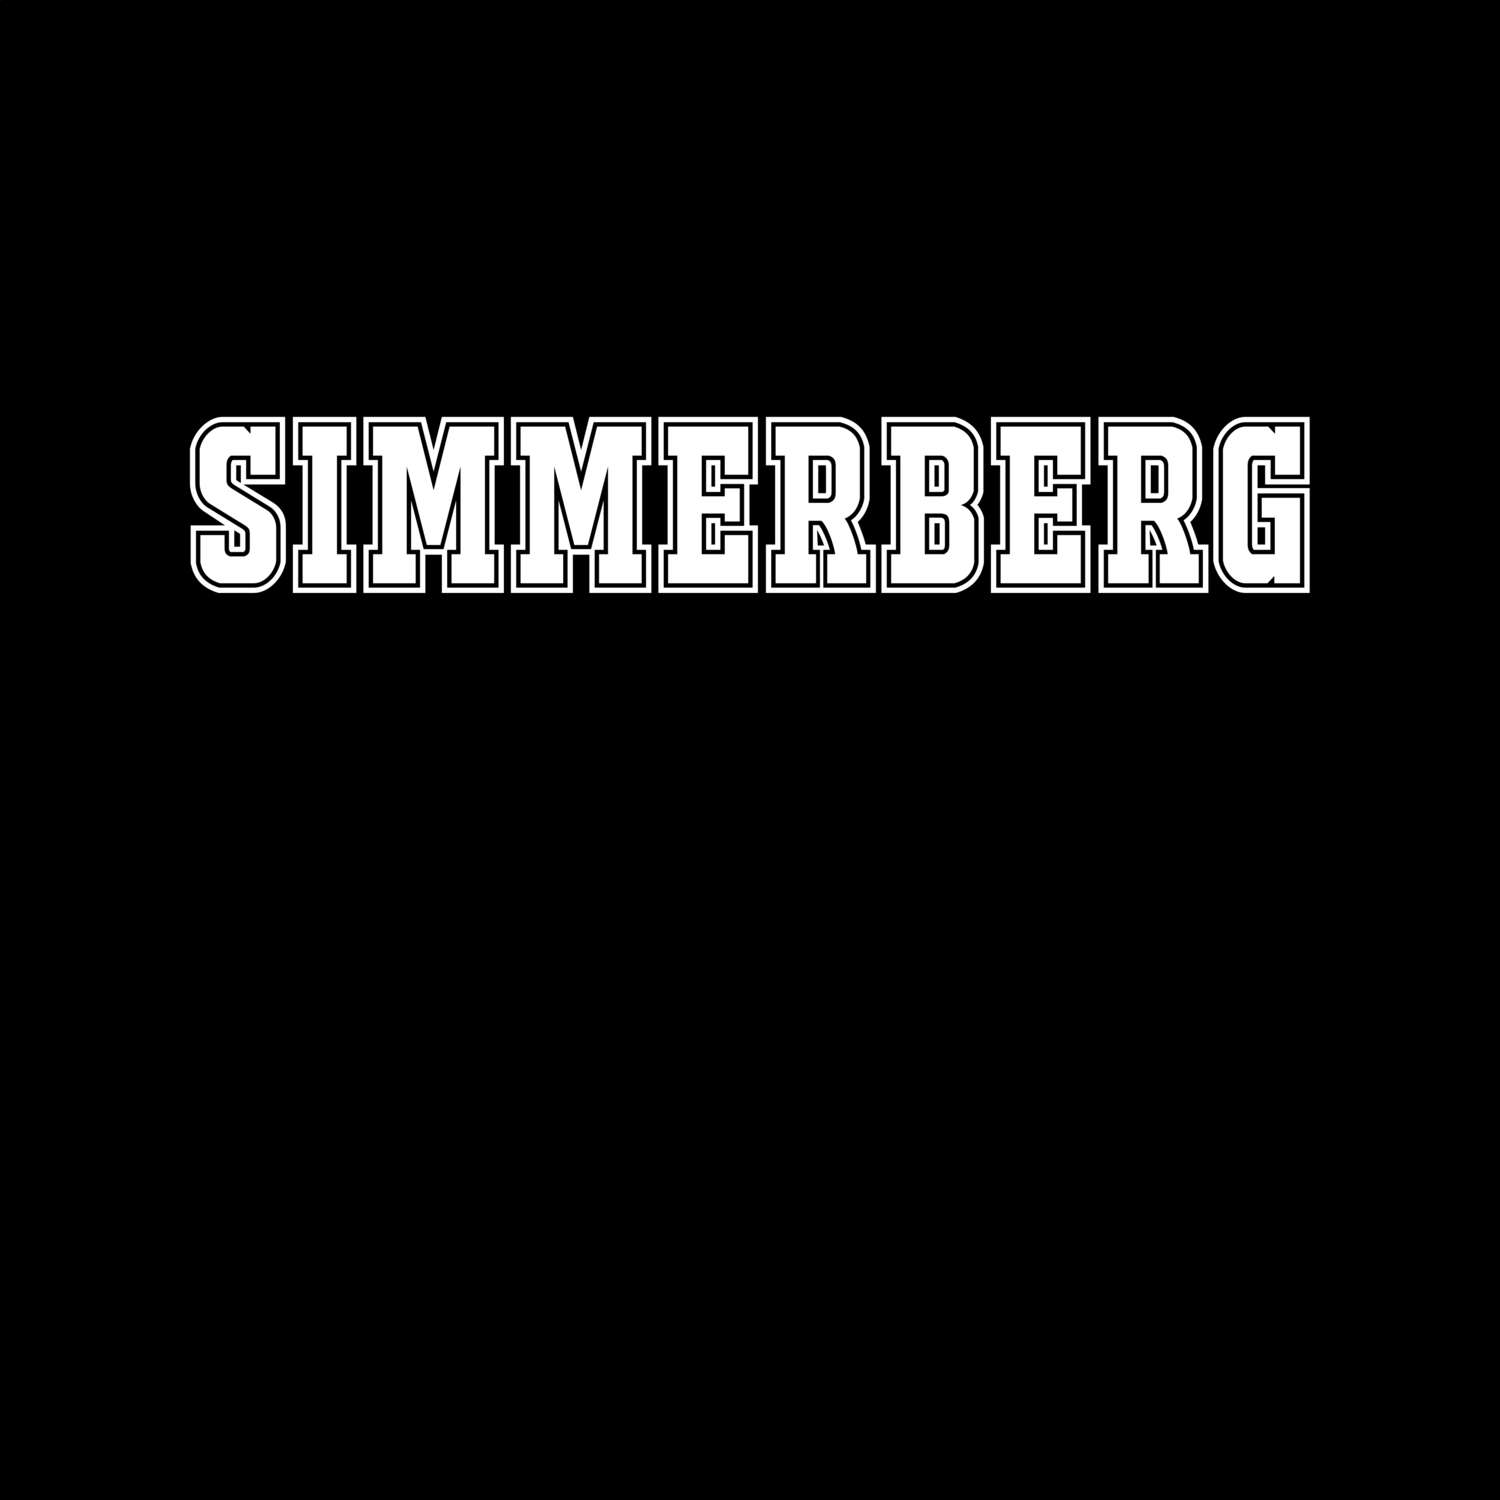 Simmerberg T-Shirt »Classic«